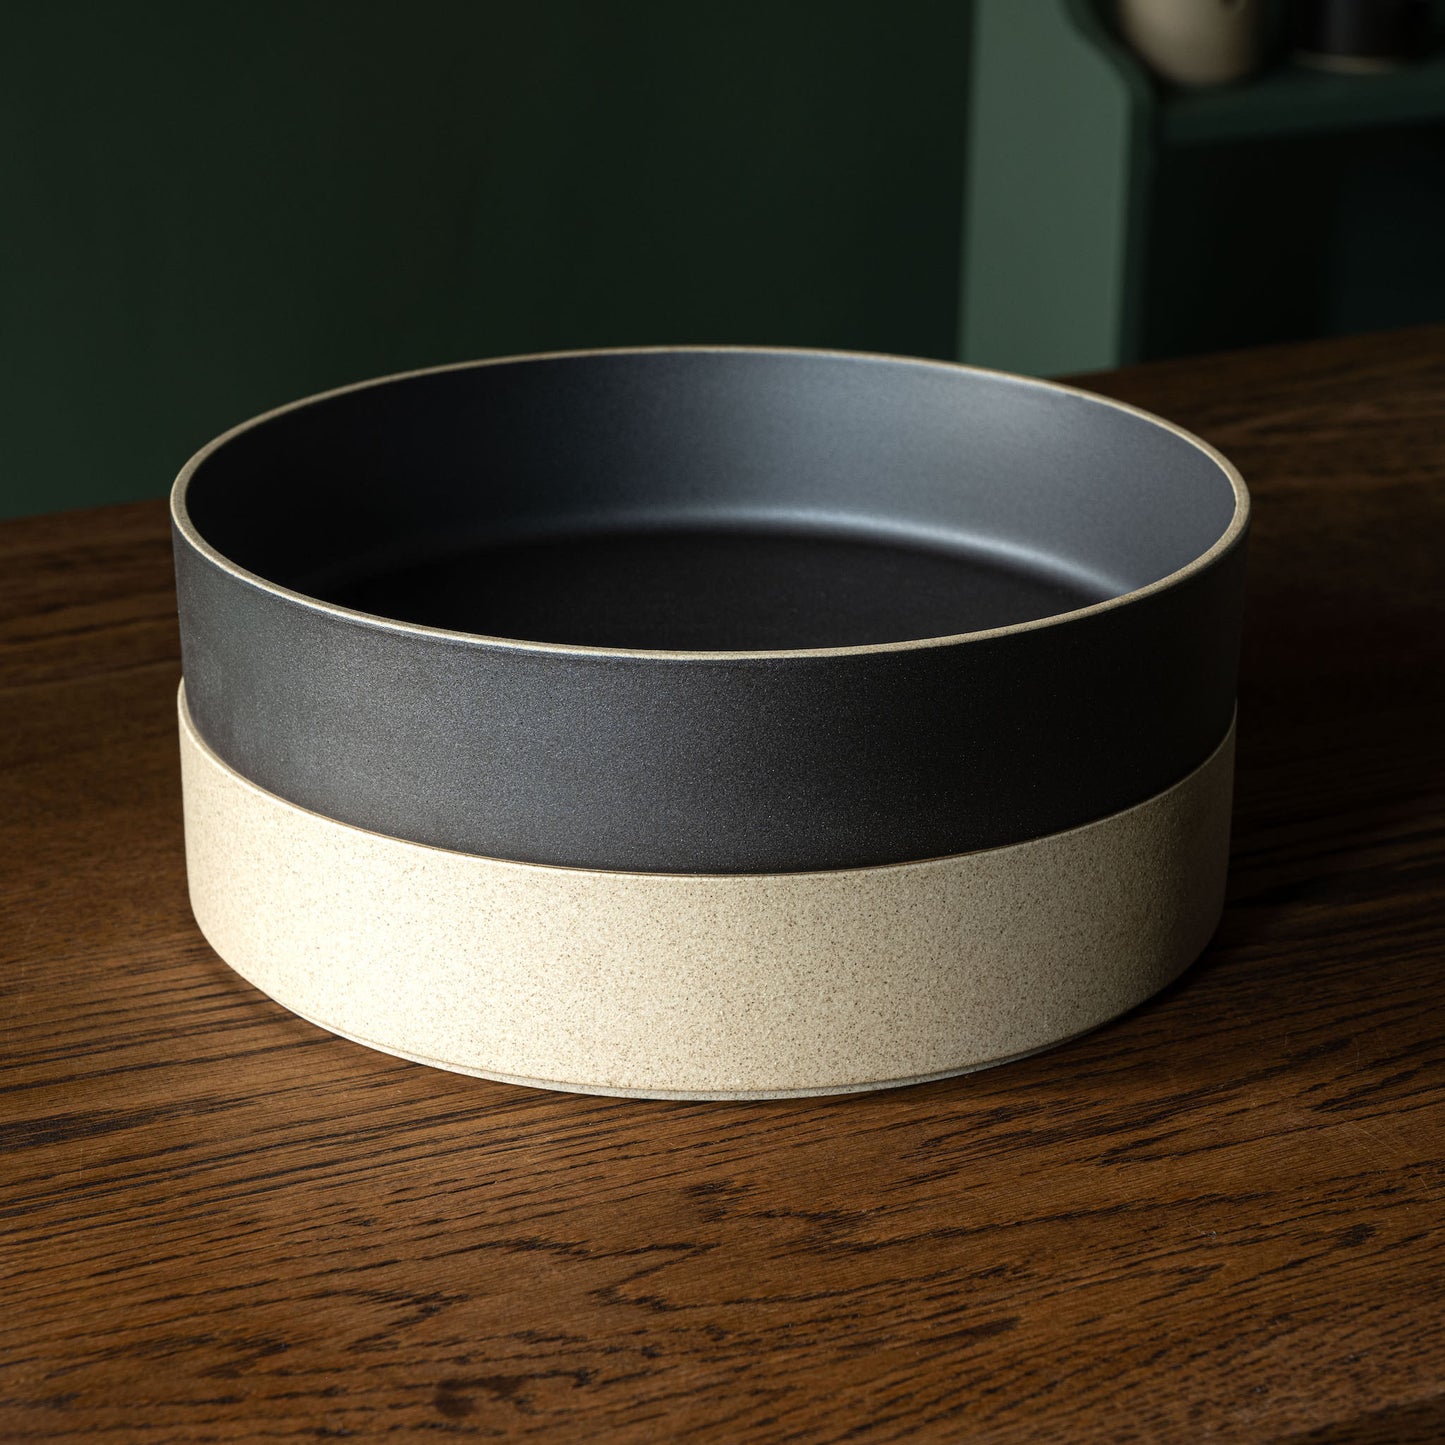 Hasami Porcelain serving / display bowls 